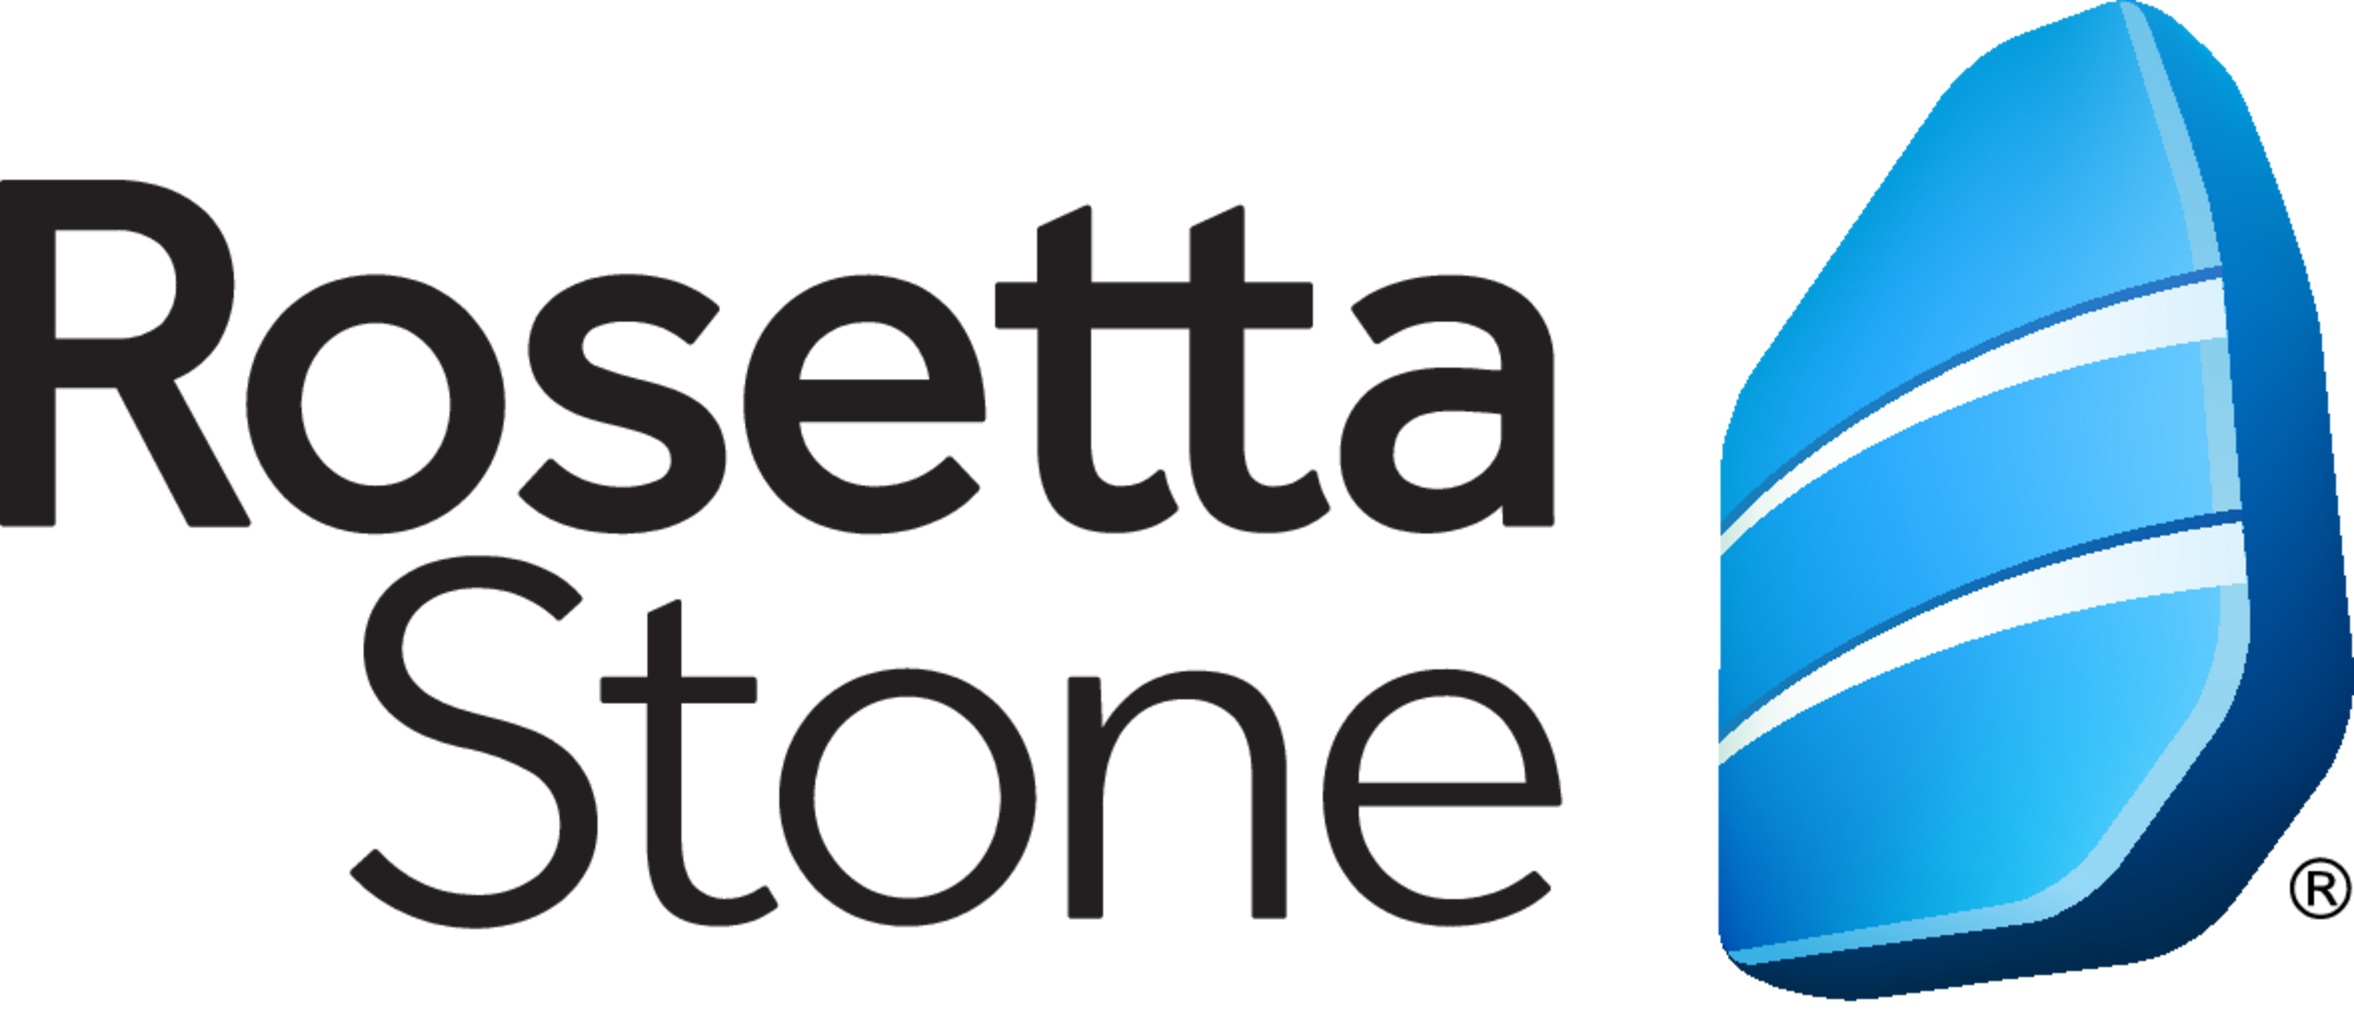 Rosetta Stone Promo Codes